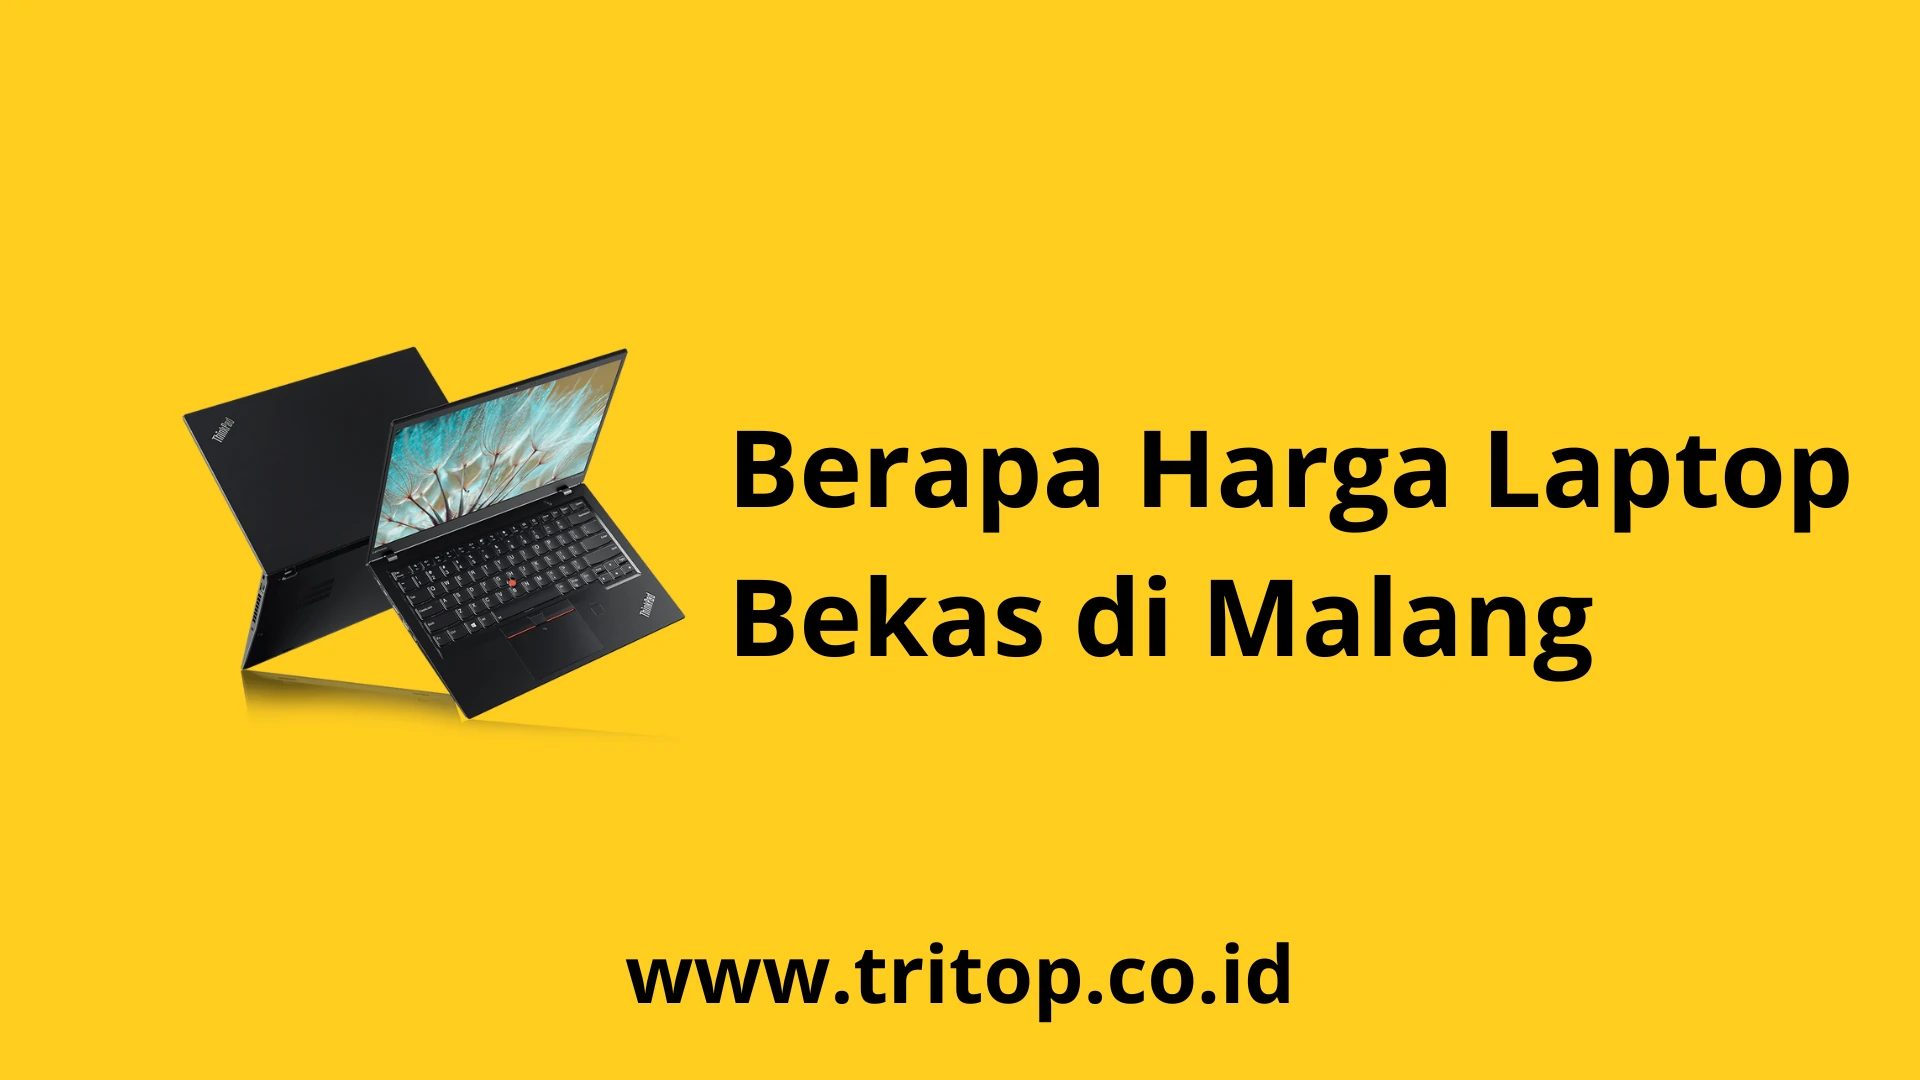 Harga Laptop Bekas Malang Tritop.co.id